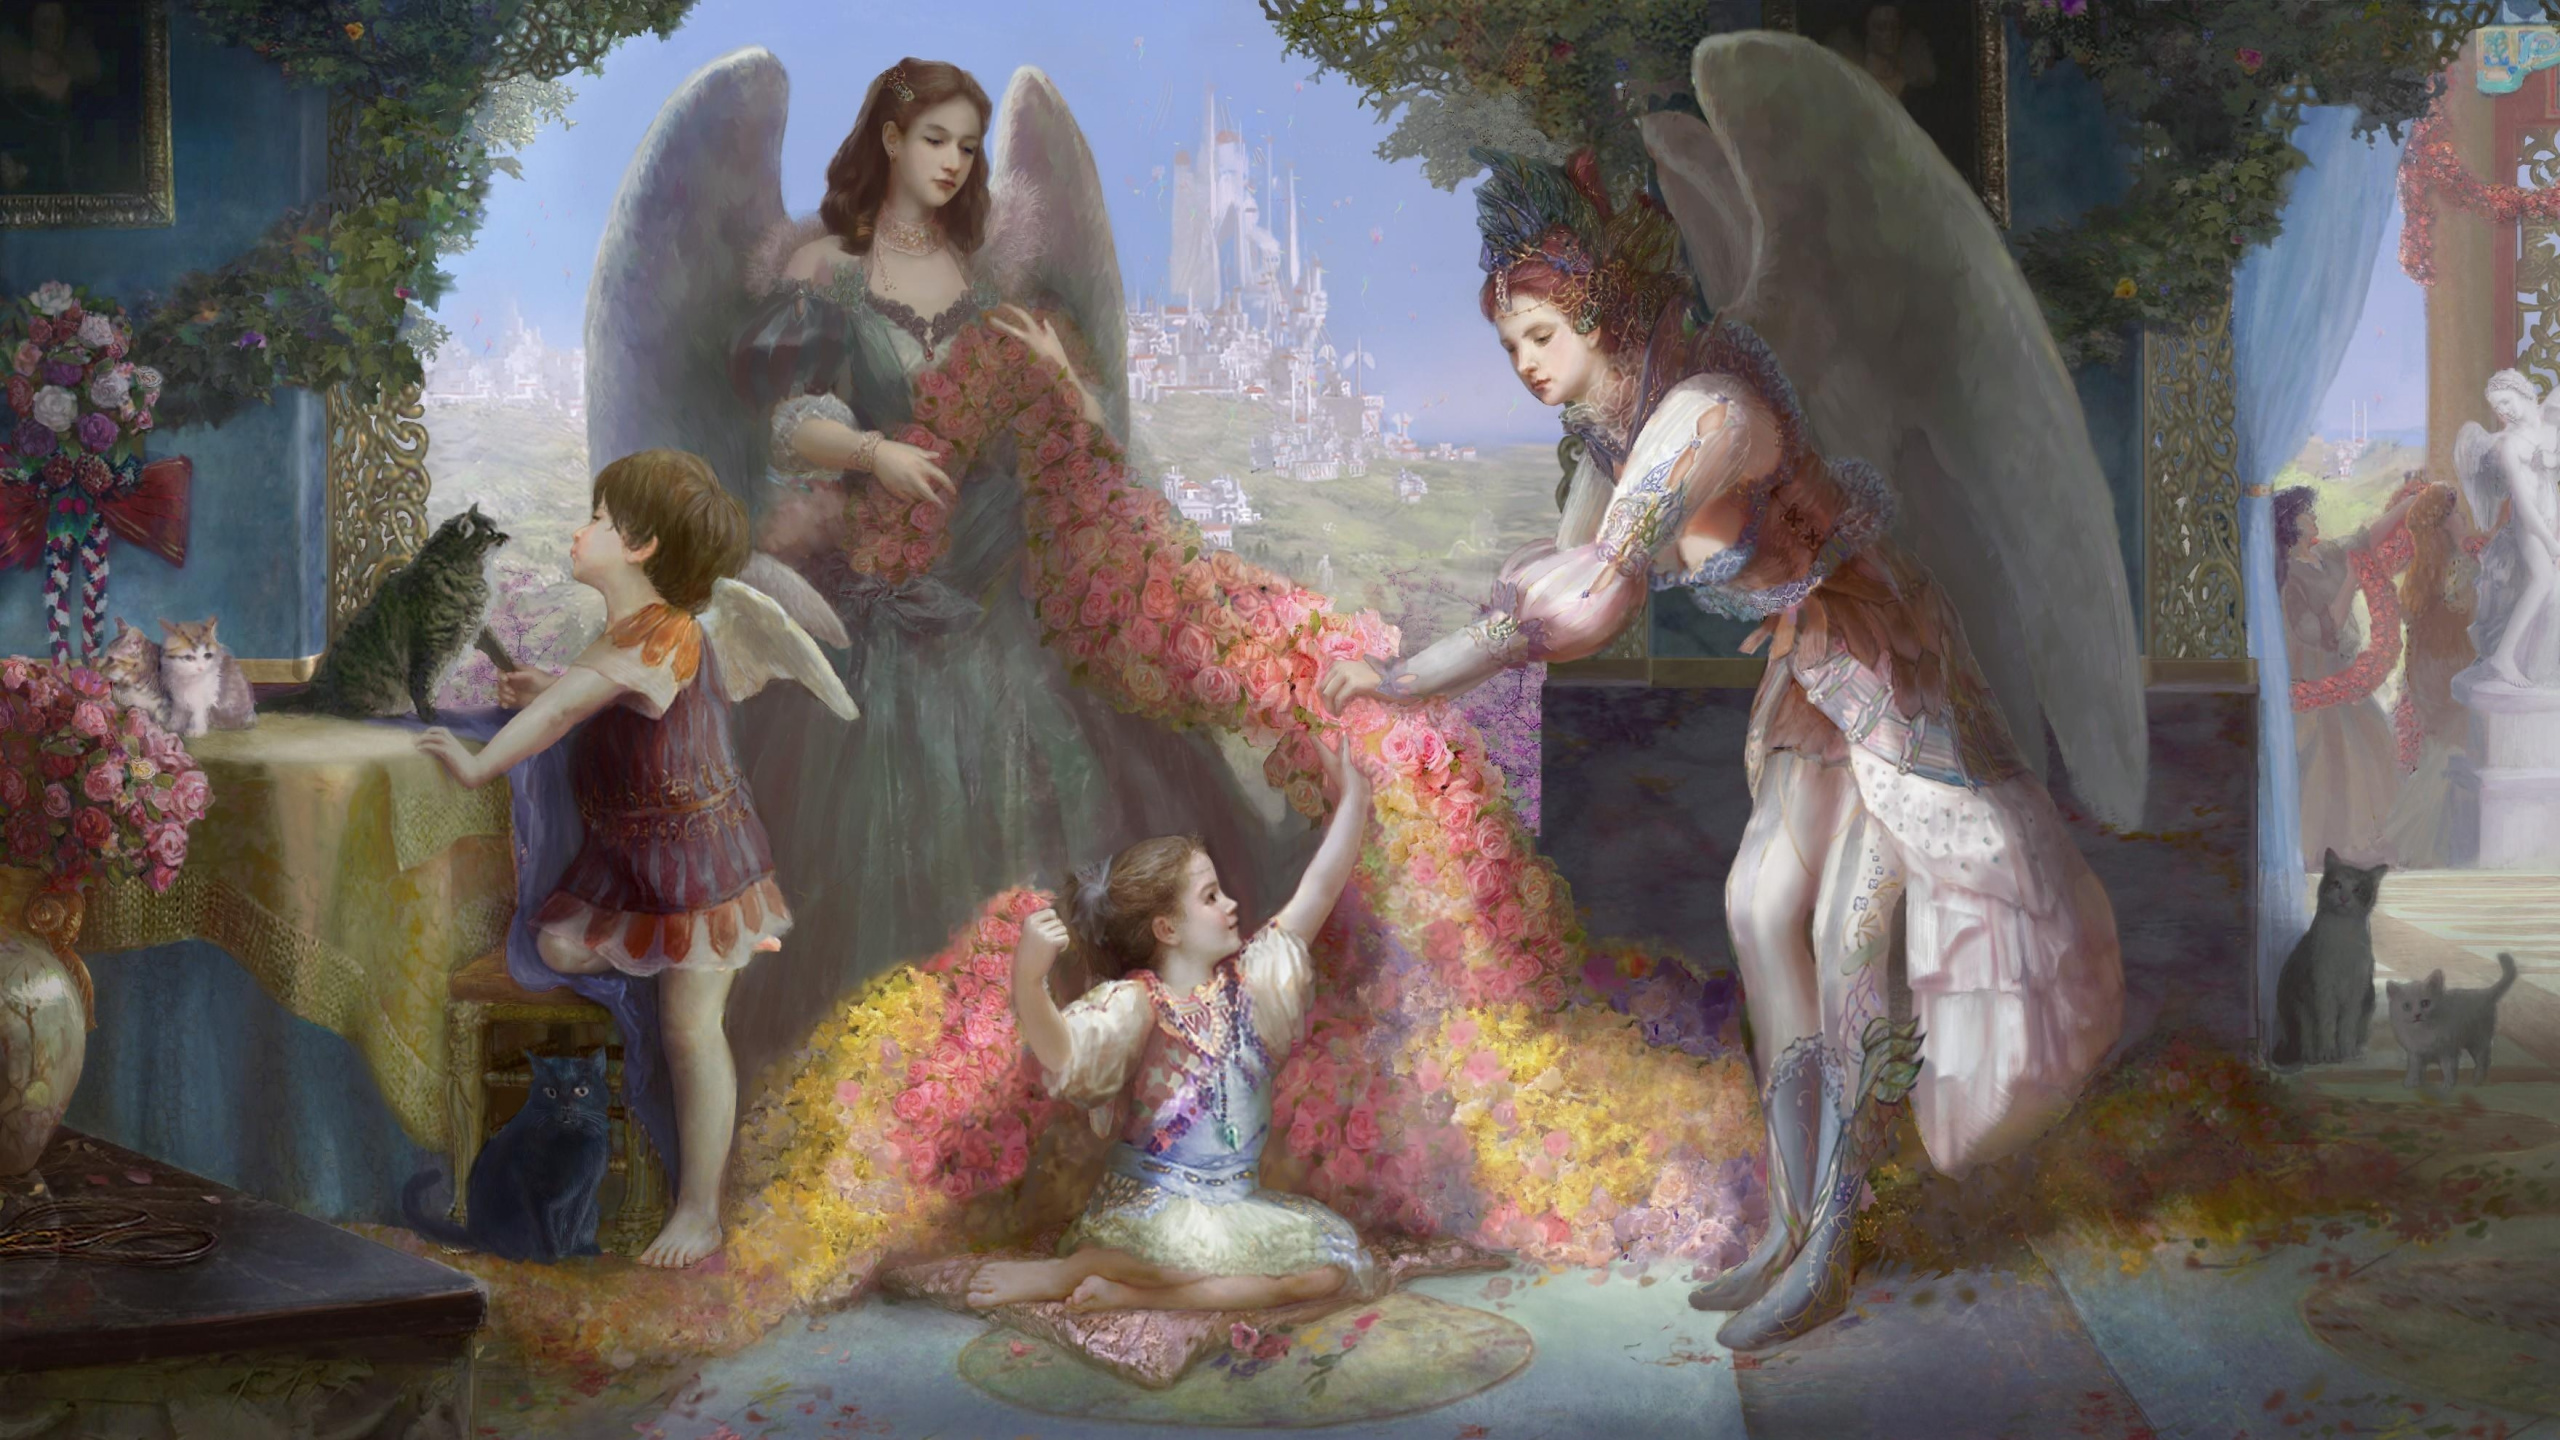 Fille en Robe Blanche et Rouge Debout à Côté de la Peinture de Fille en Robe Blanche. Wallpaper in 2560x1440 Resolution